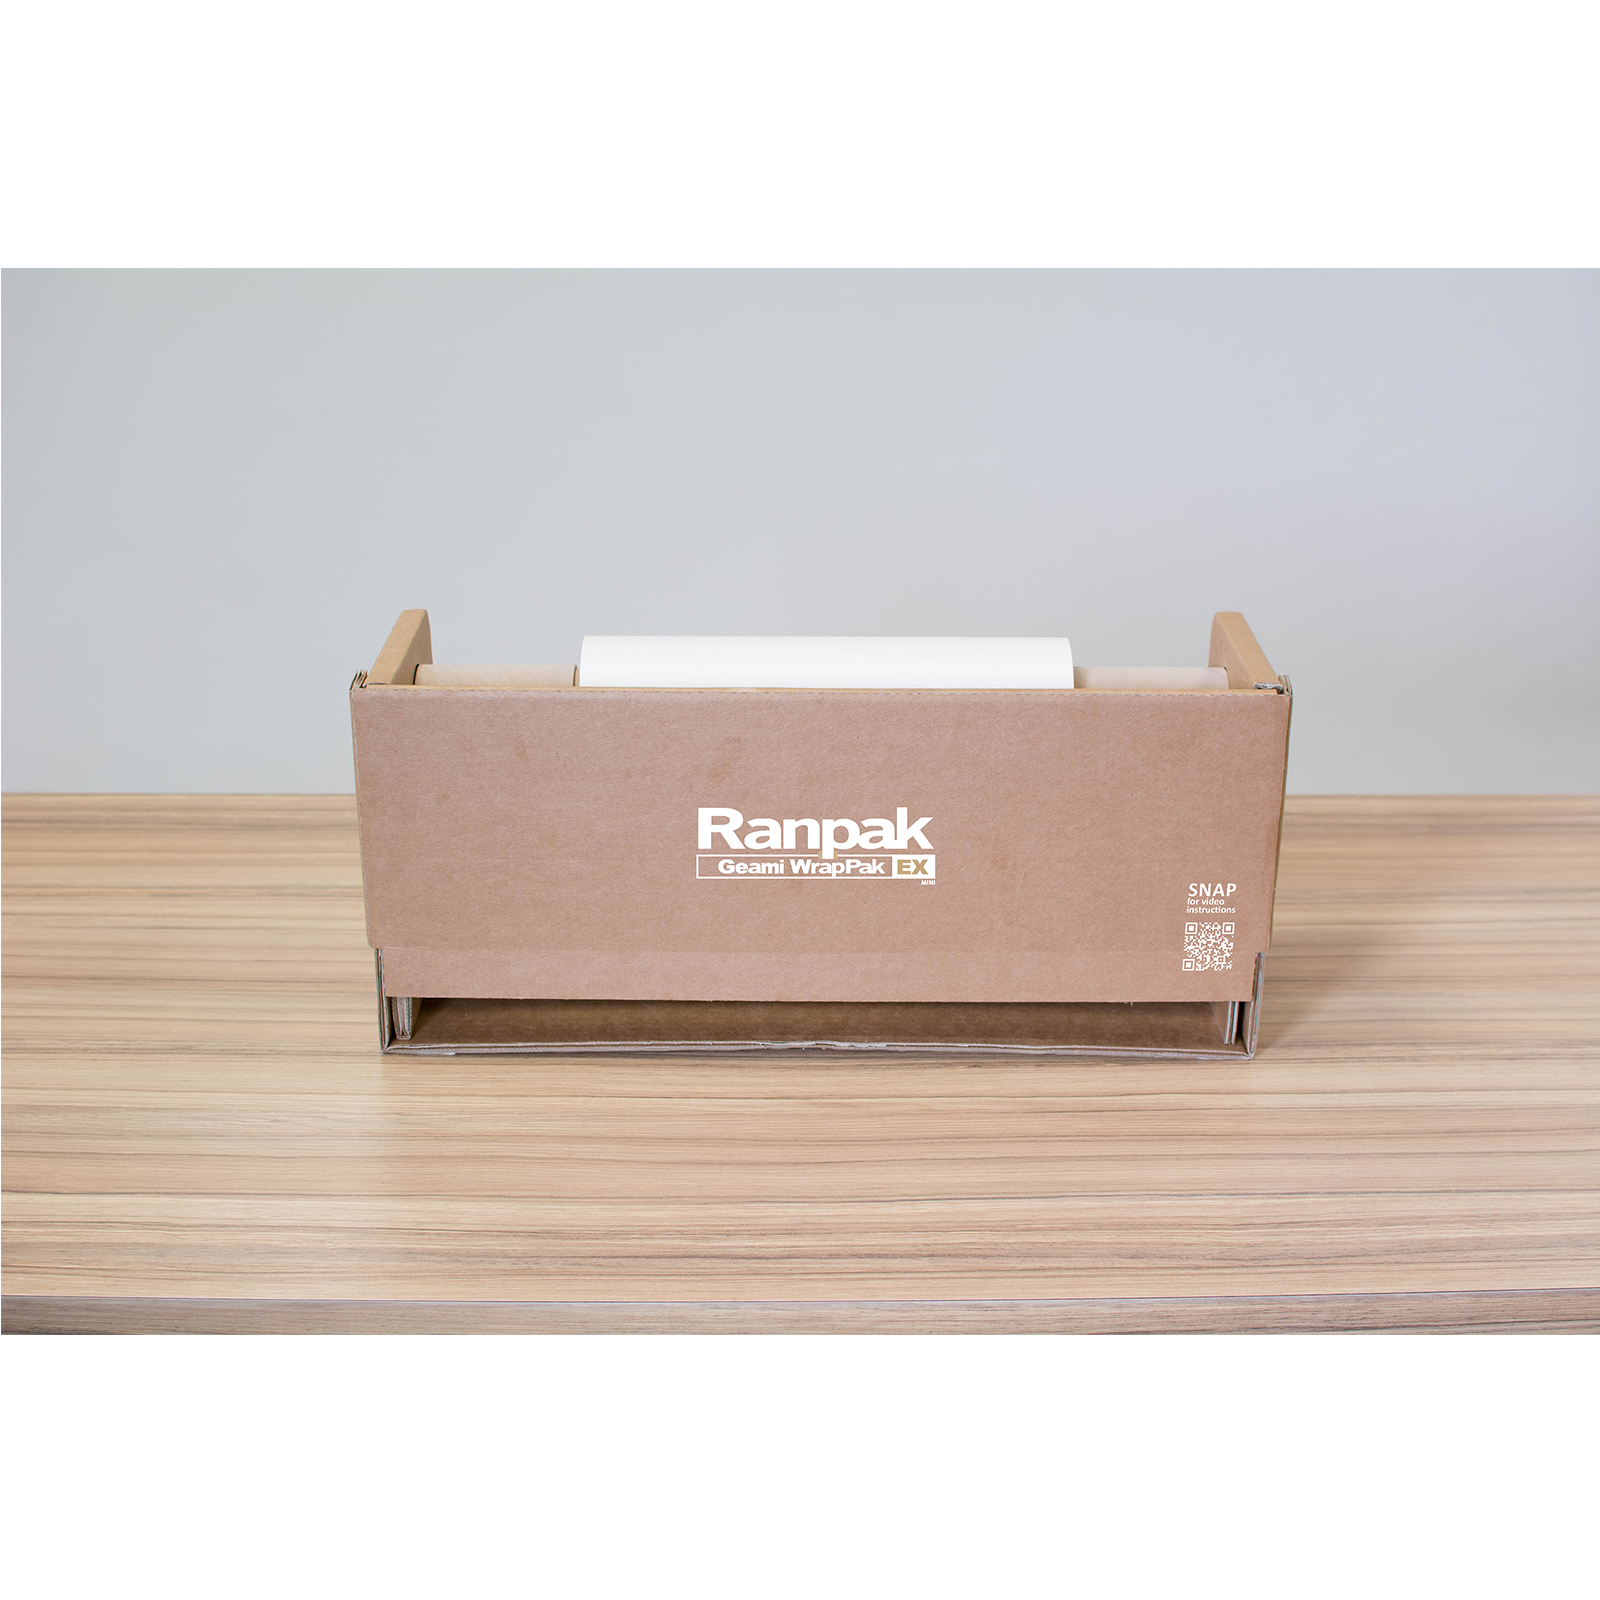 Ranpak Geami 50.8cm x 82m honeycomb paper with tissue paper inlay EXBOX mini disposable box dispenser